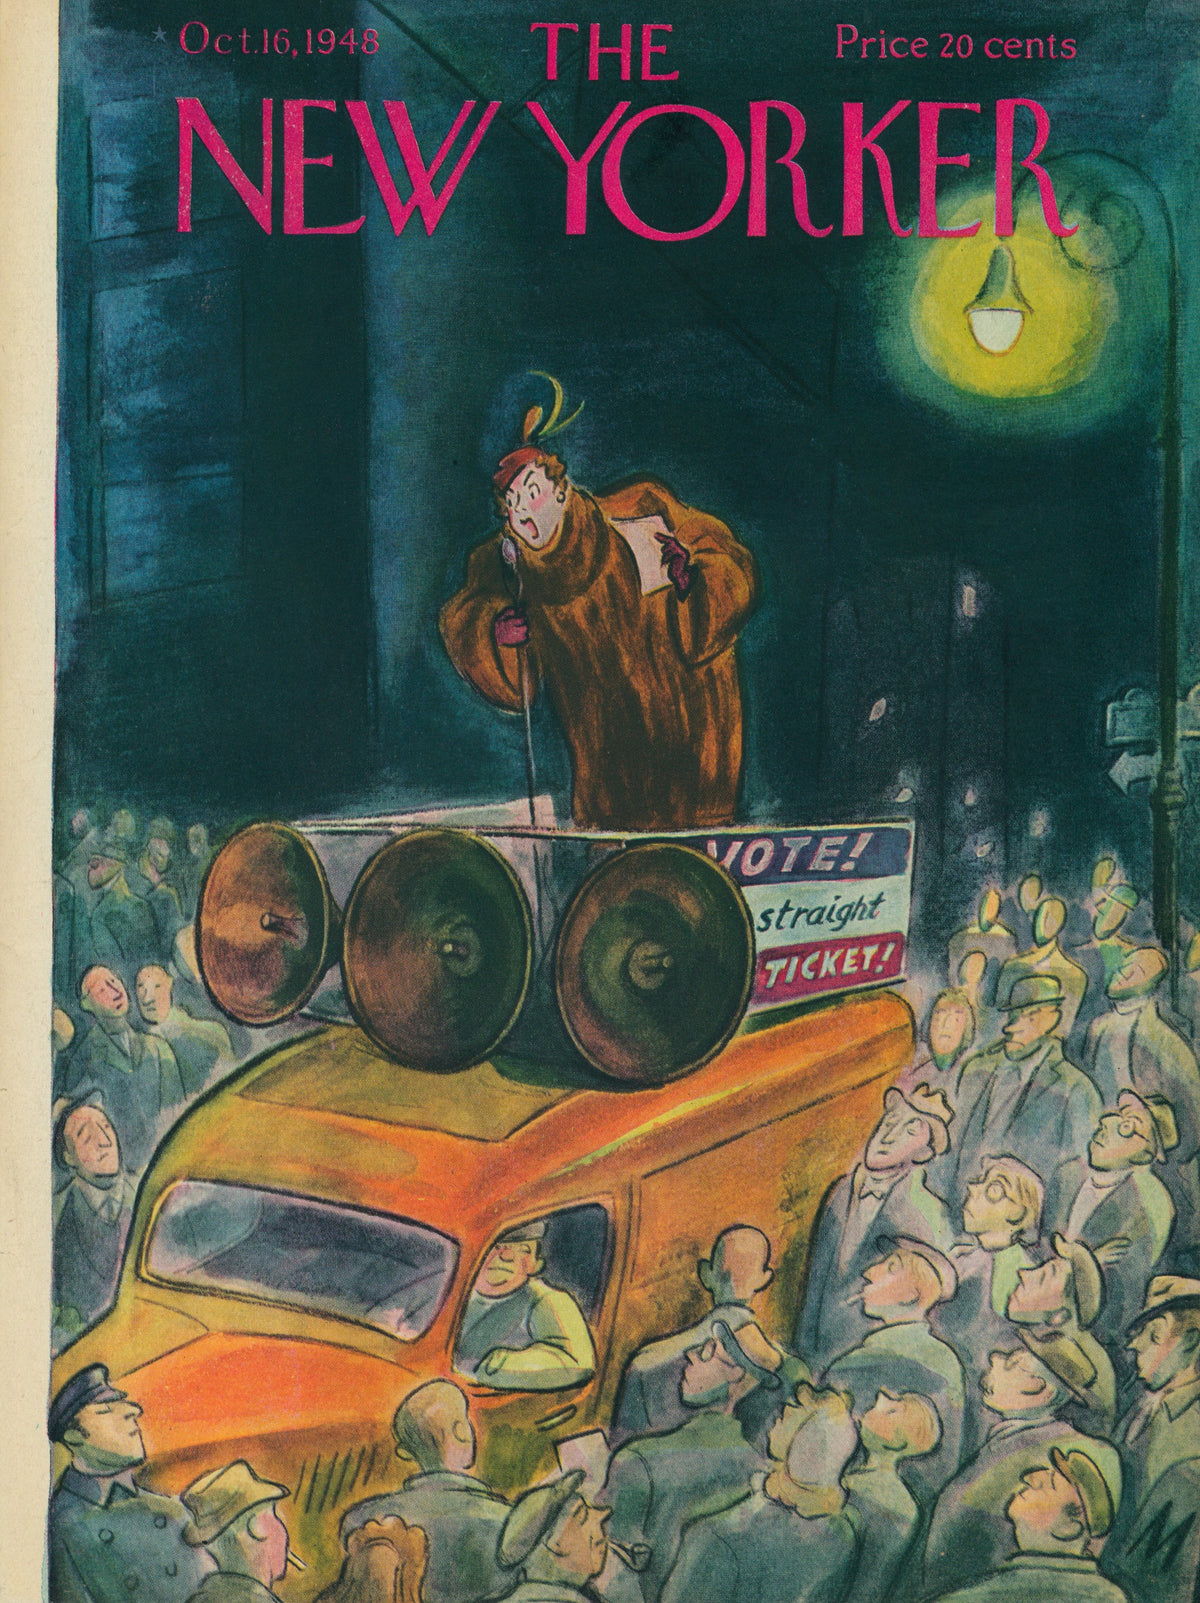 Town Crier- The New Yorker - Authentic Vintage Antique Print